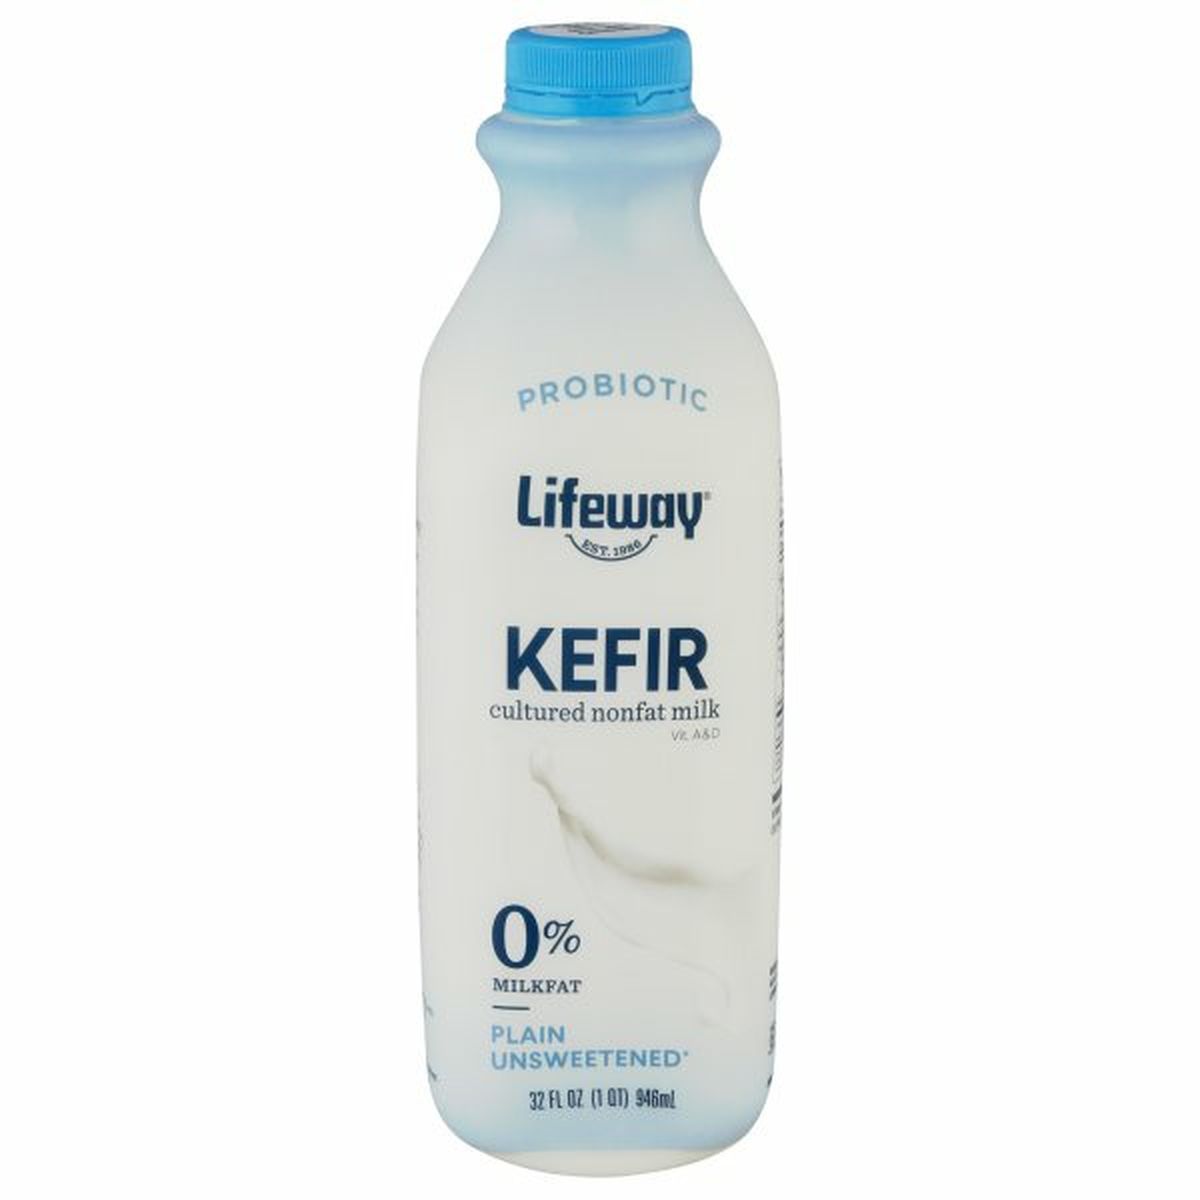 Calories in Lifeway Kefir, 0% Milkfat, Plain Unsweetened